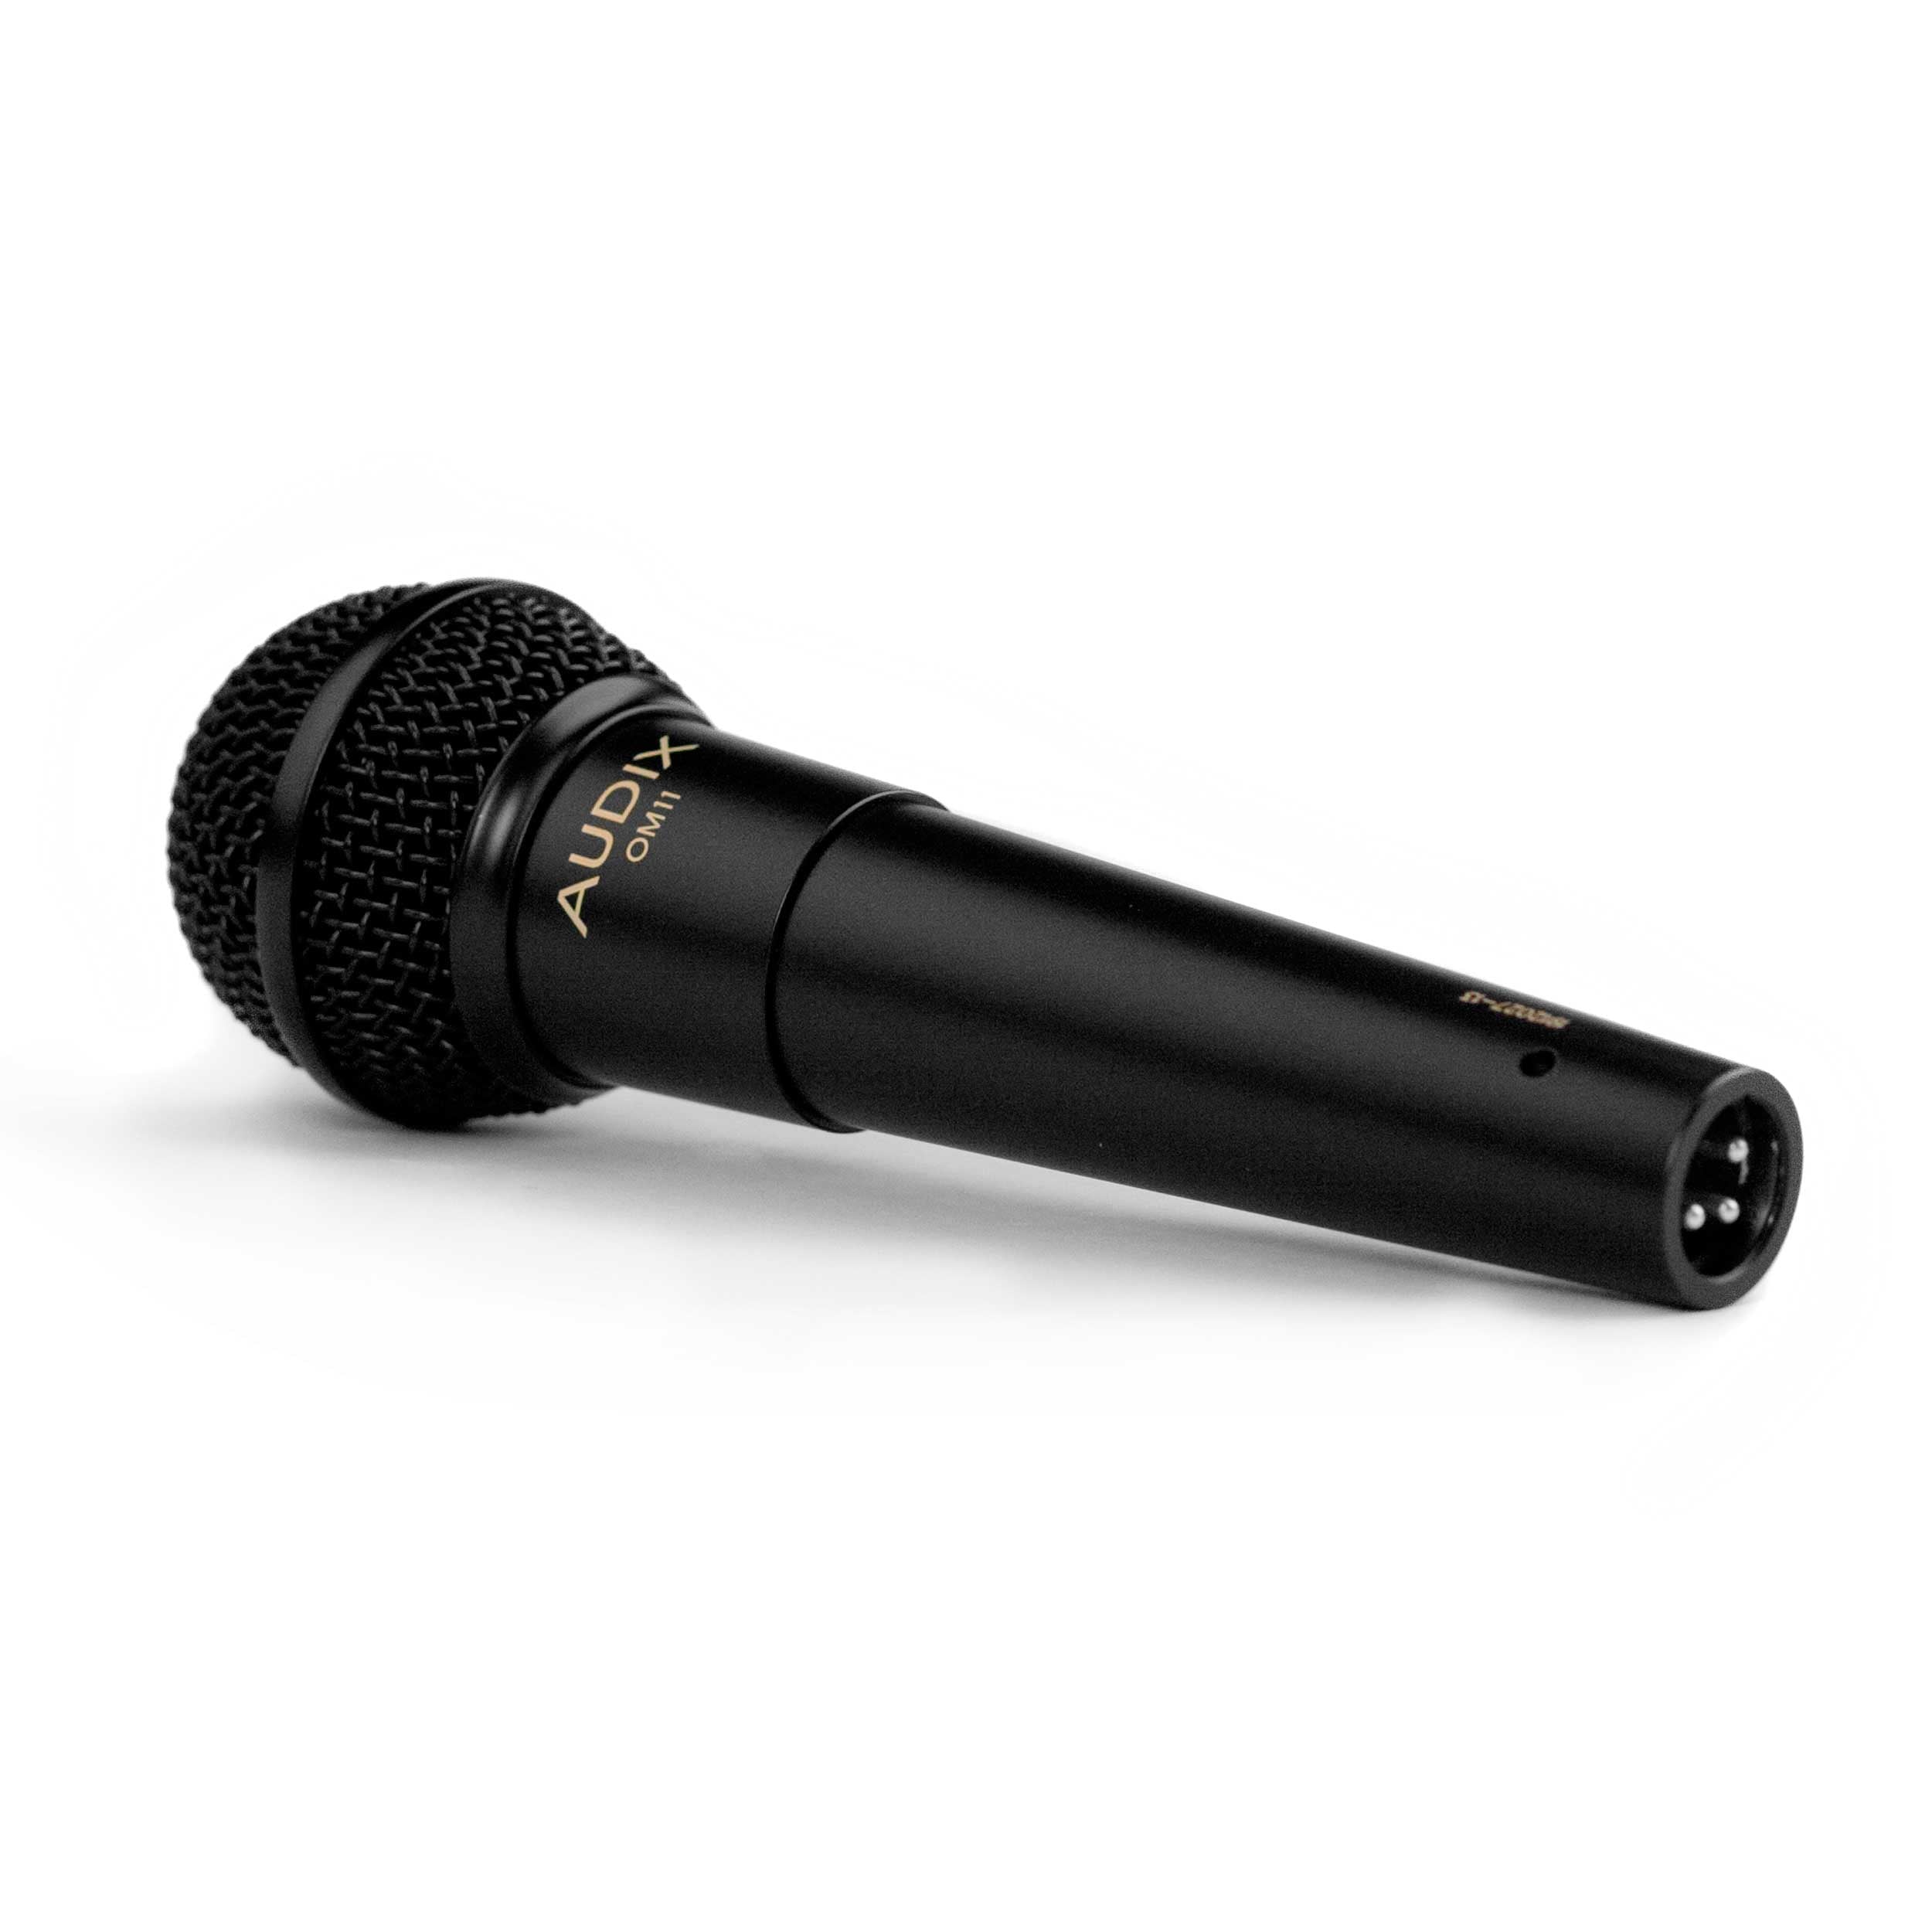 Audix OM-11 Dynamic Vocal Mircrophone